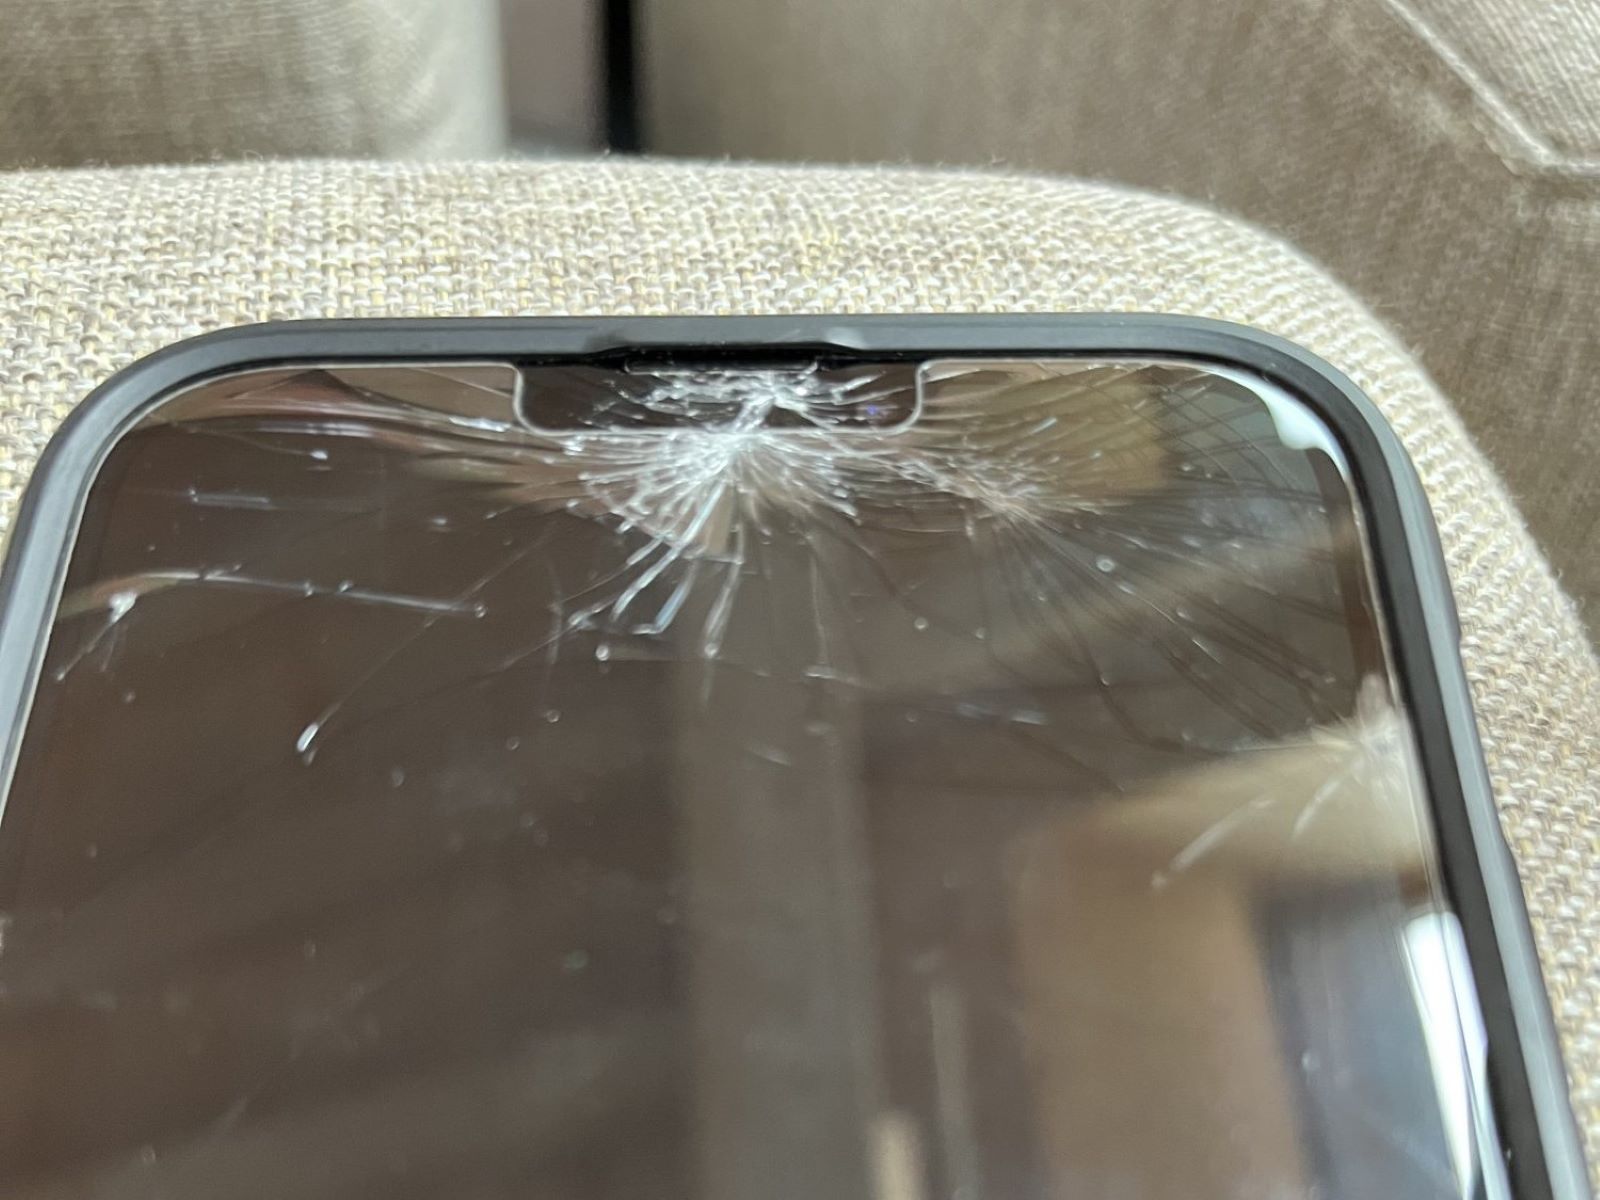 cracked-screen-fix-addressing-damage-on-iphone-10